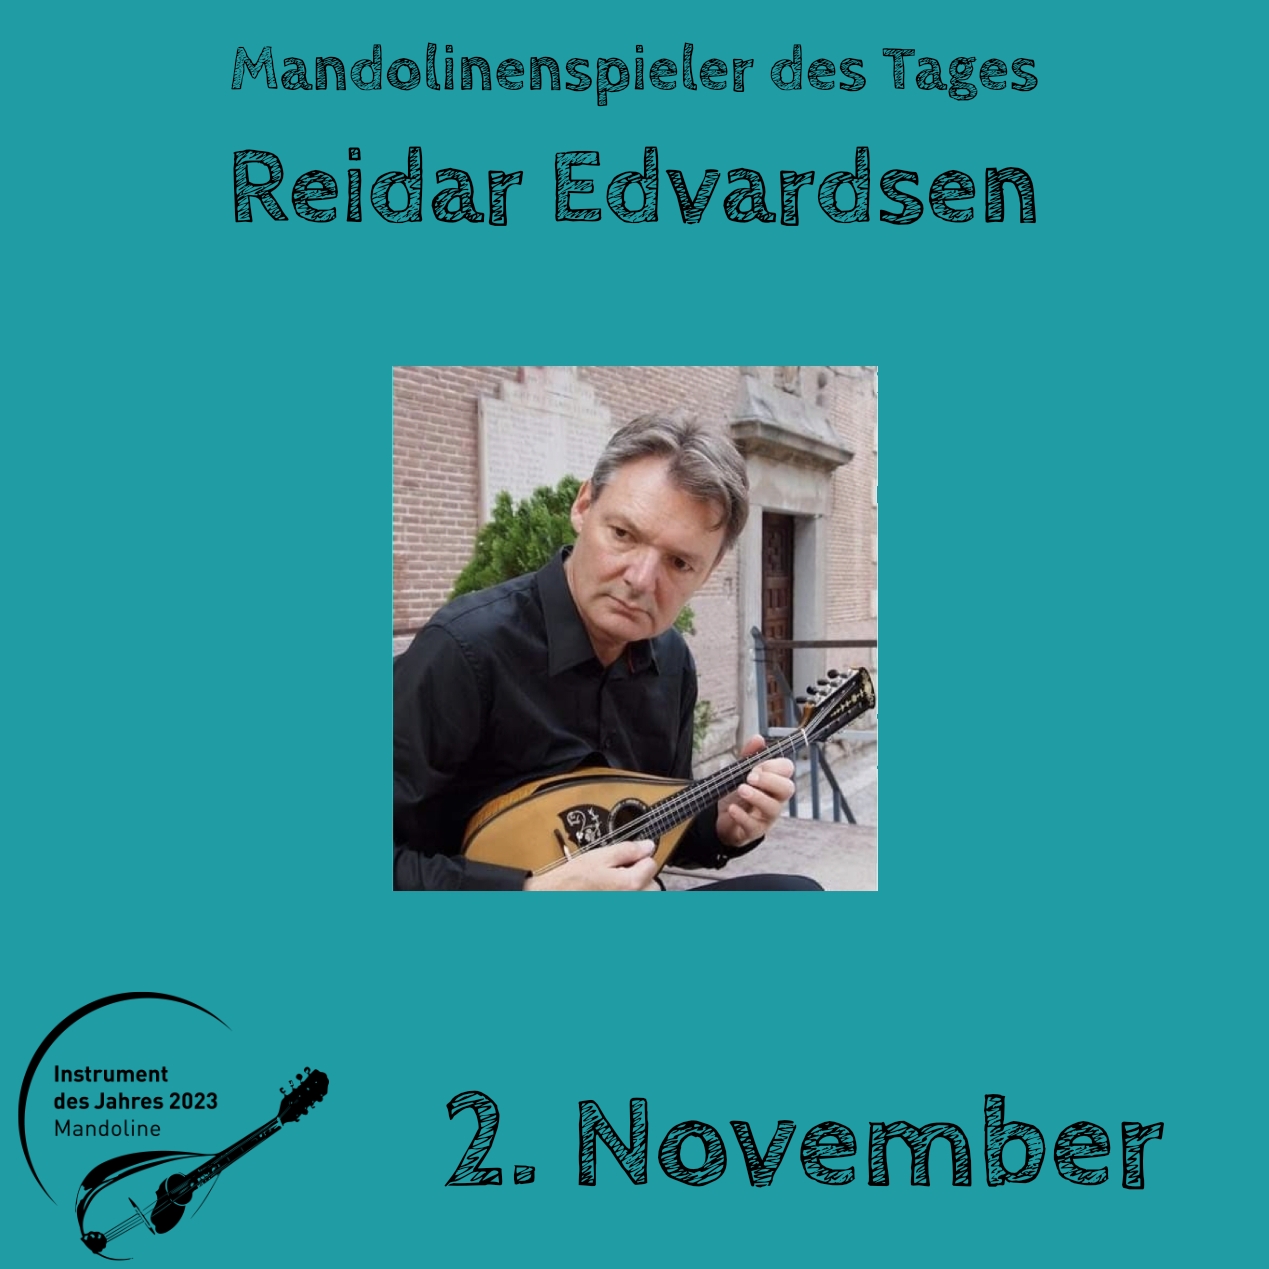 2. November - Reidar Edvardsen Instrument des Jahres 2023 Mandolinenspieler Mandolinenspielerin des Tages